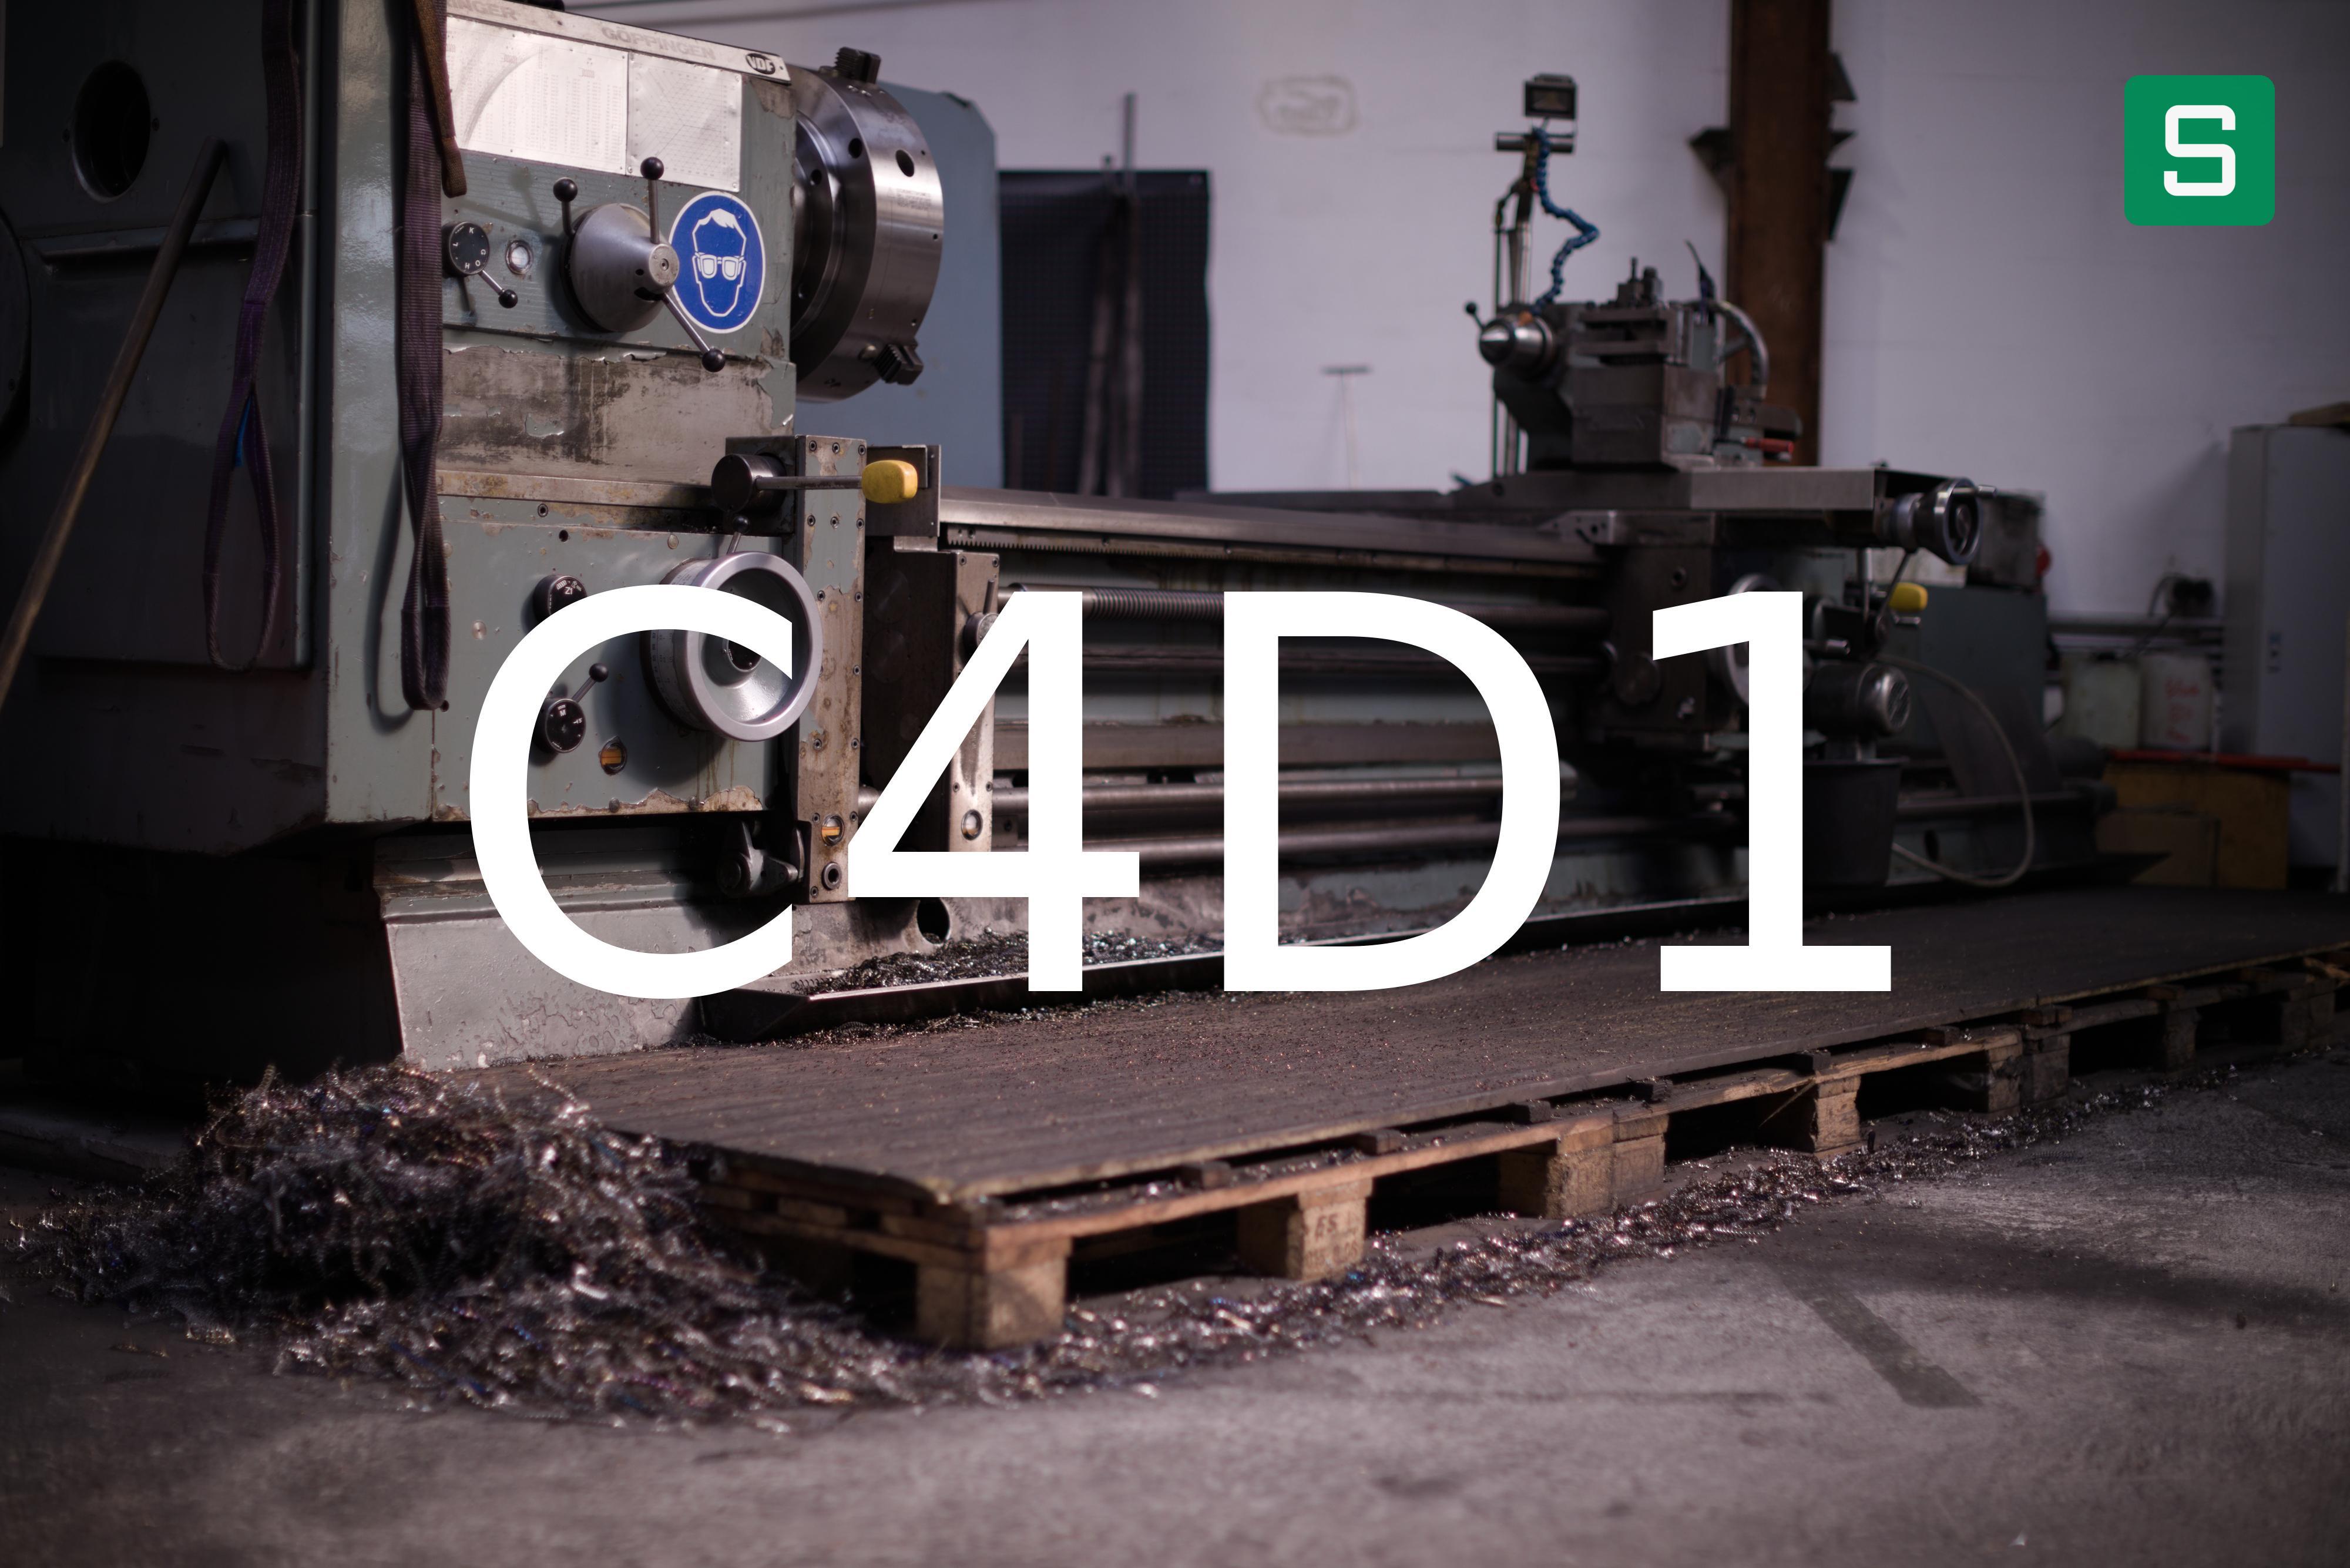 Steel Material: C4D1